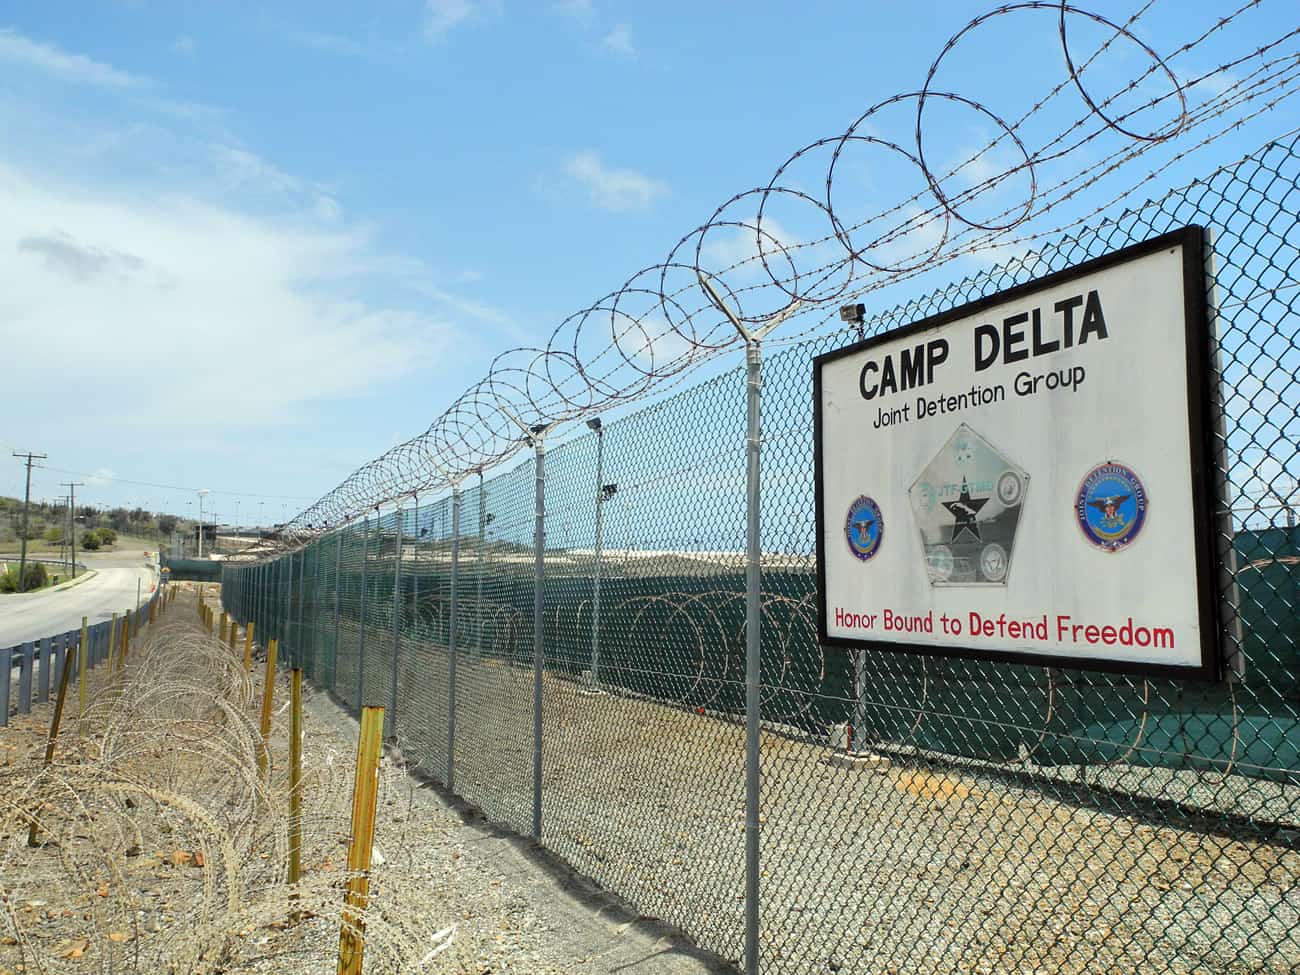 Camp Delta at the U.S. Naval Base in Guantanamo Bay, Cuba on Aug. 7, 2013.